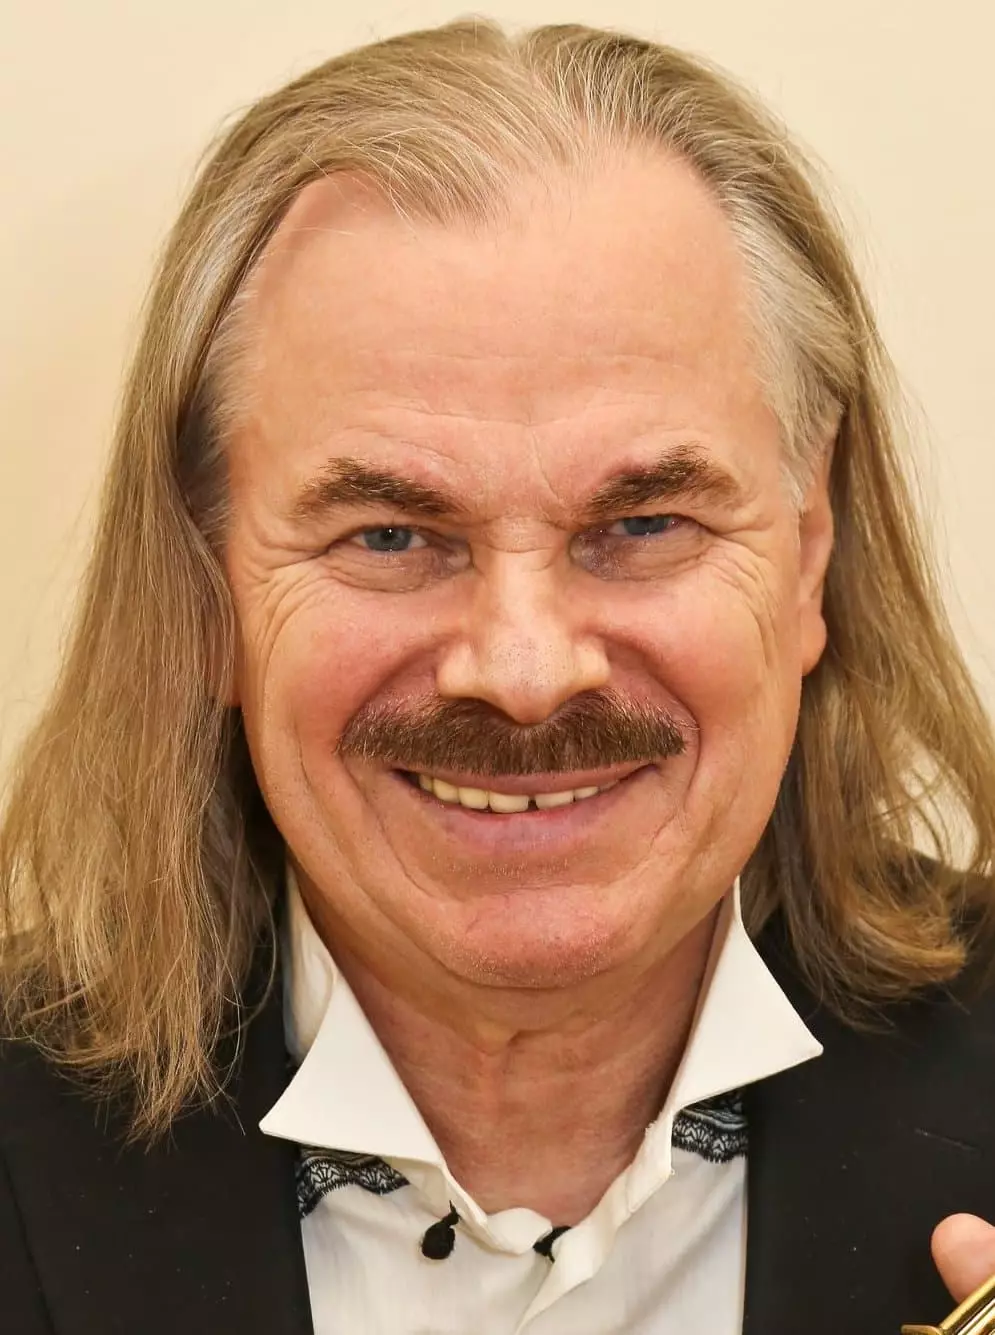 Vladimir Presnyakov SR. - រូបថតជីវវិទ្យាជីវិតផ្ទាល់ខ្លួនព័ត៌មាន, ចម្រៀង 2021